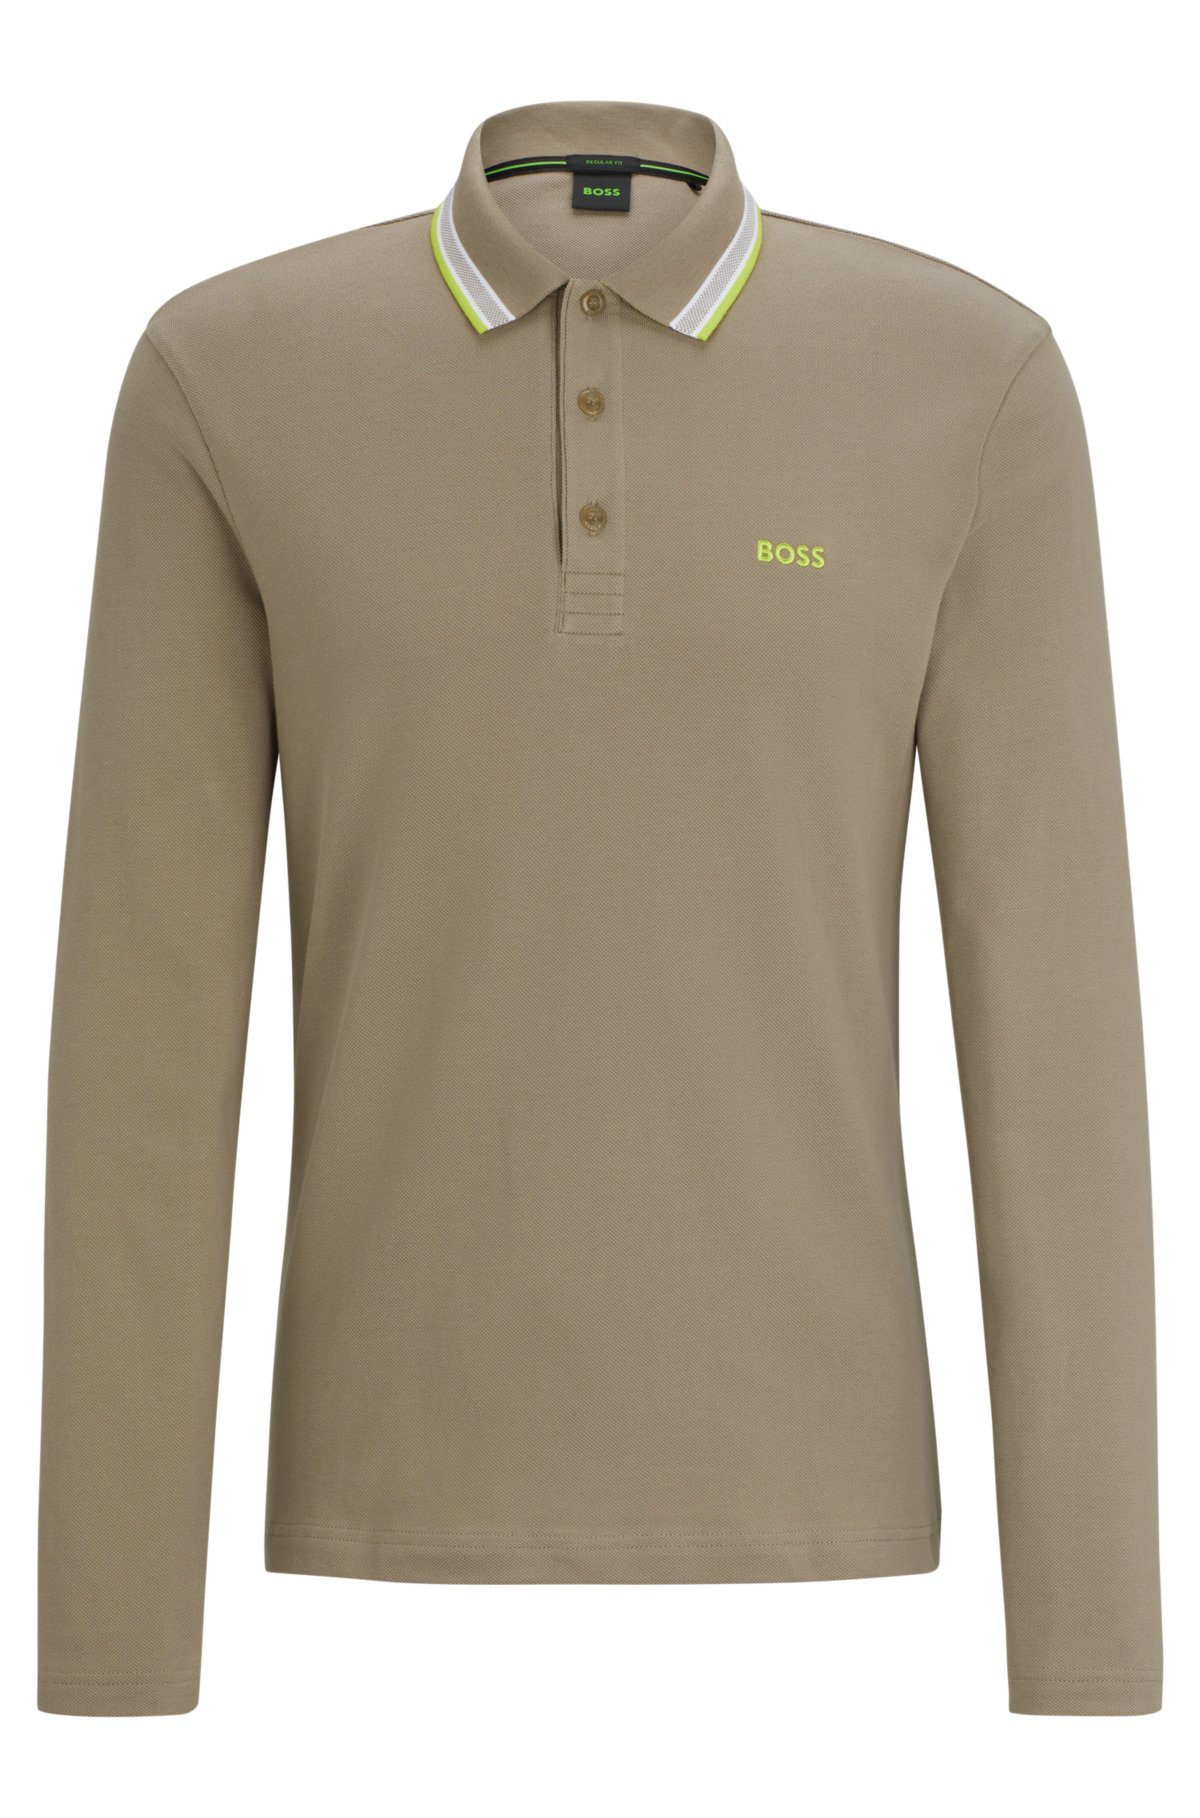 BOSS Long-sleeved cotton-piqué polo with contrast logo